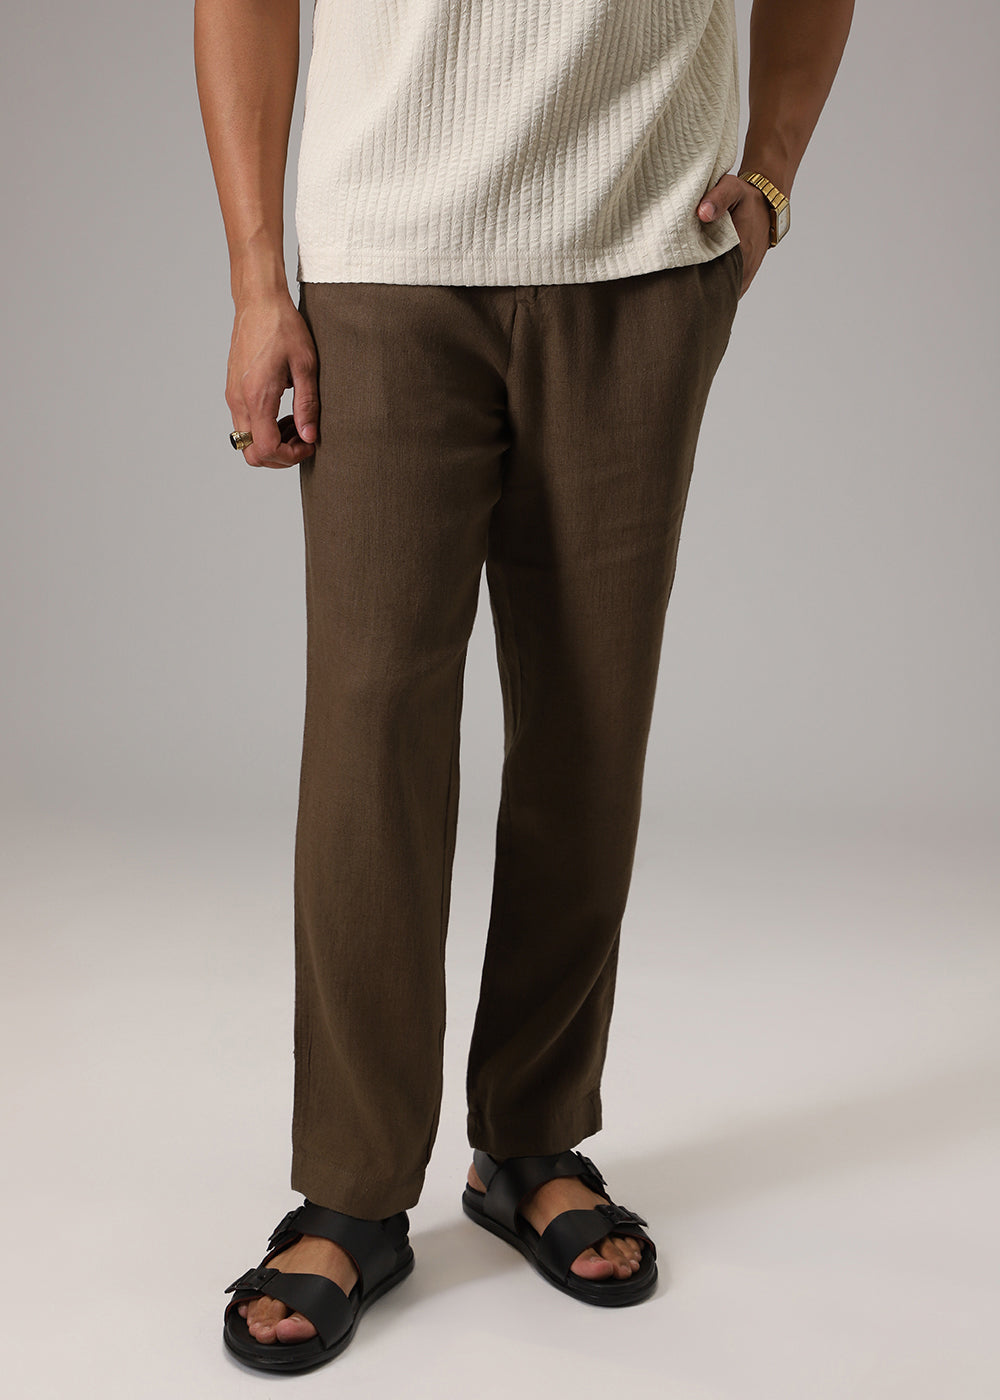 Chestnut Brown Linen Pant